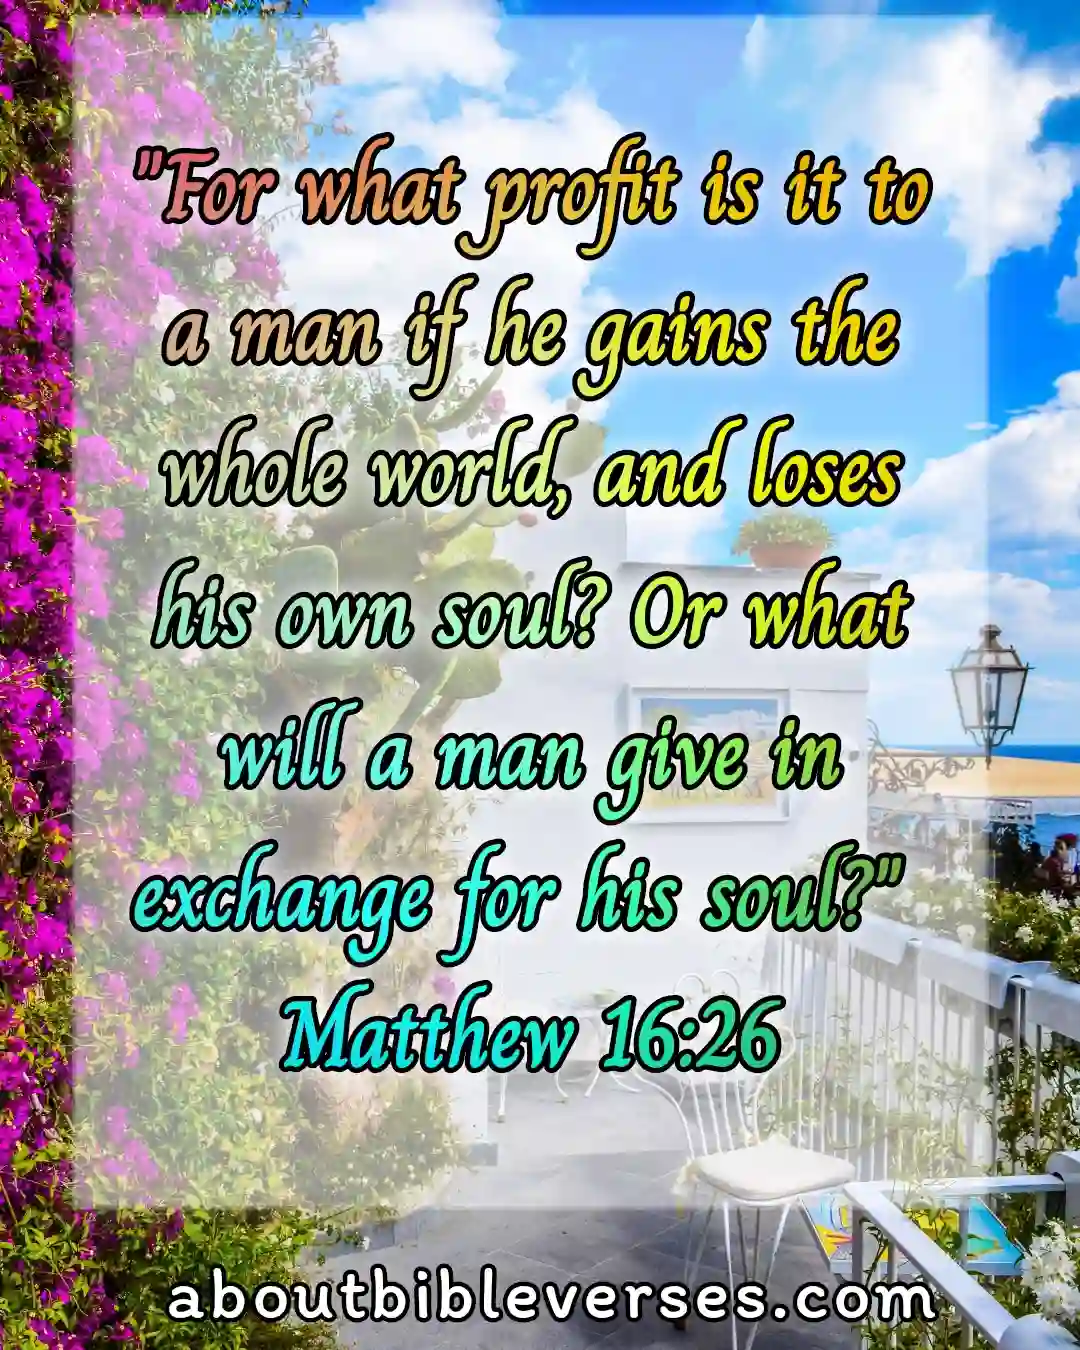 today bible verse(Matthew 16:26)